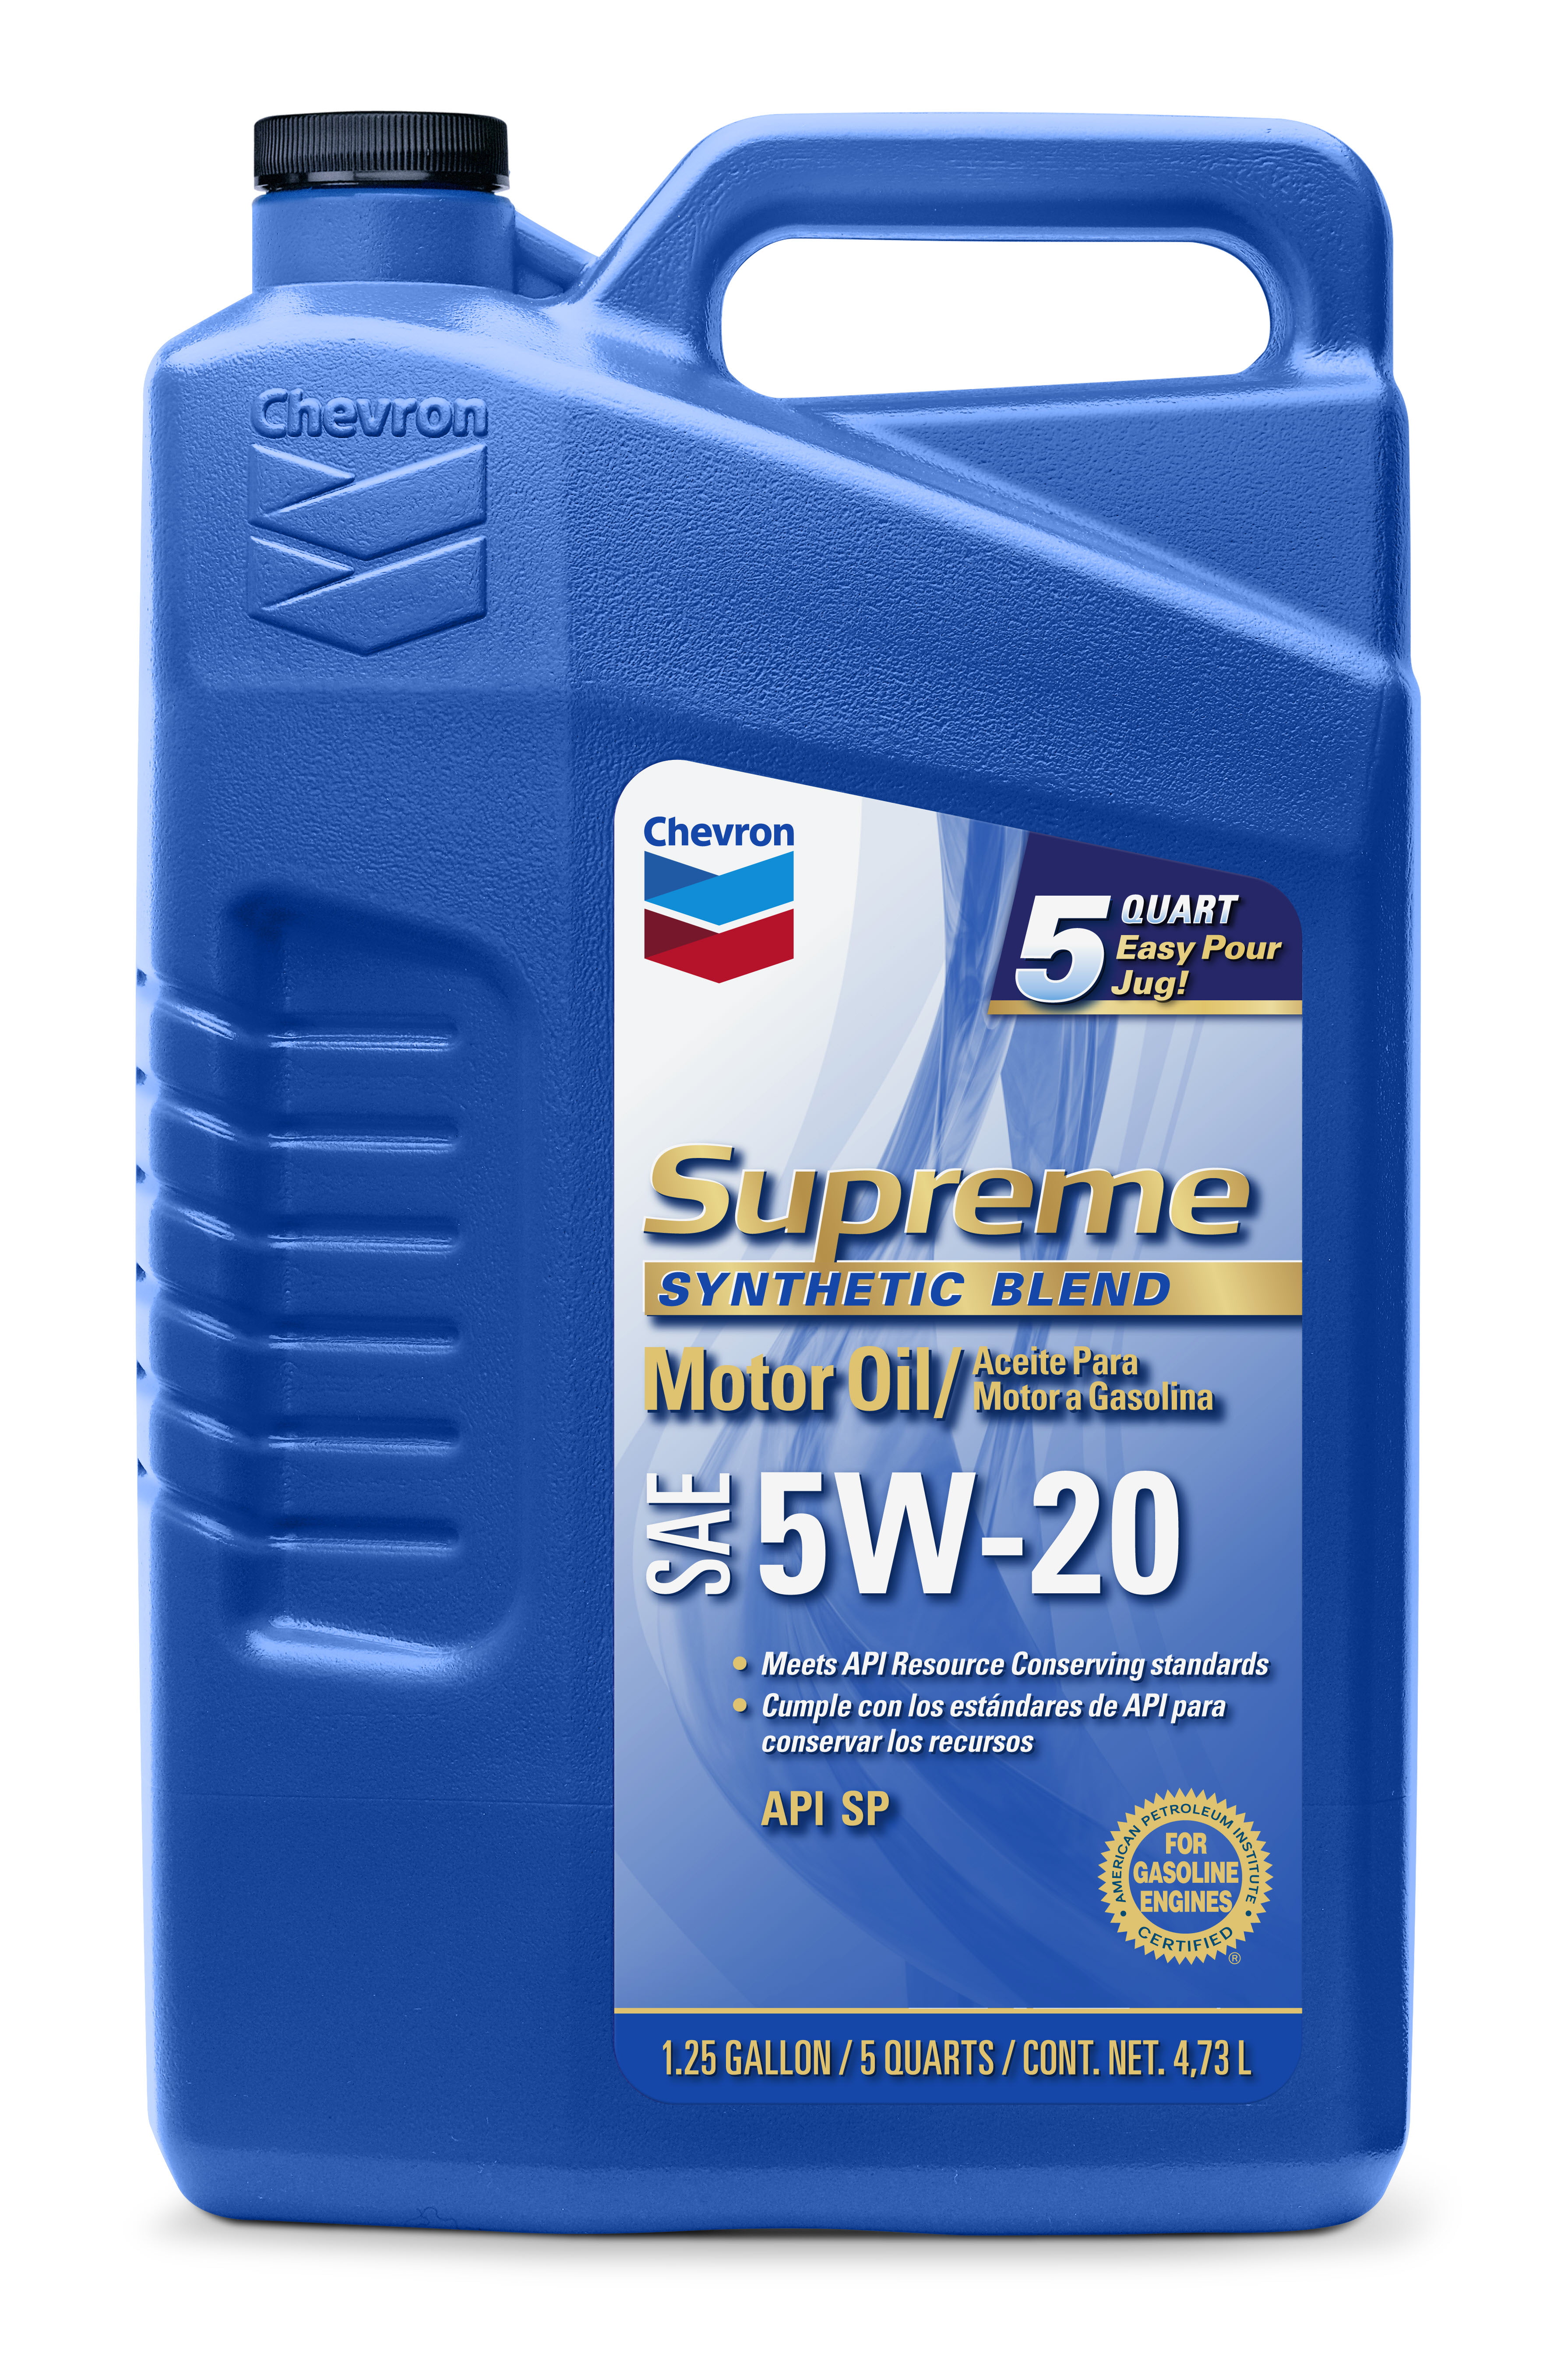 Chevron Supreme Synthetic Blend Motor Oil 5W20, 5 Quart  Walmart.com